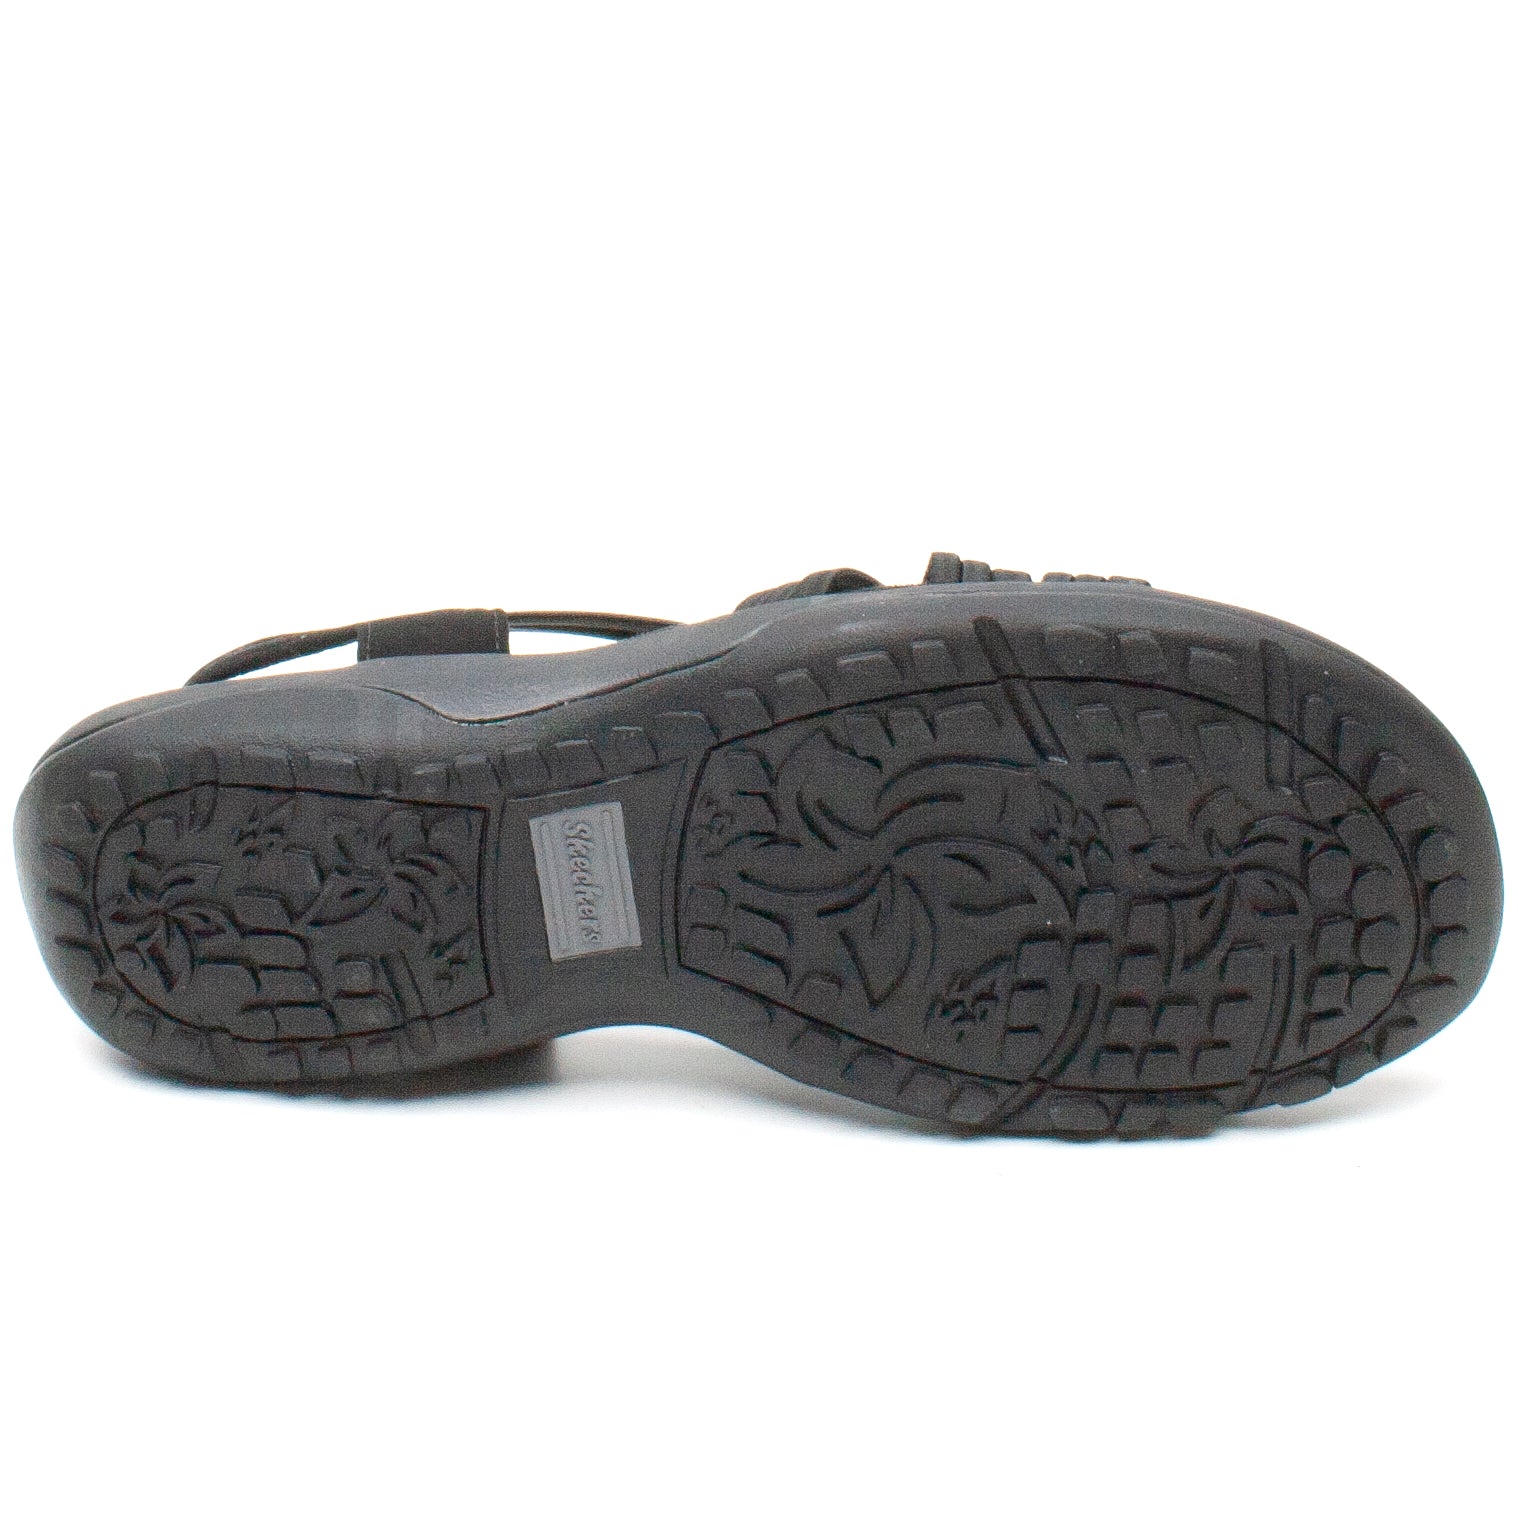 Skechers Sandale dama 163023 negru ID2475-NG